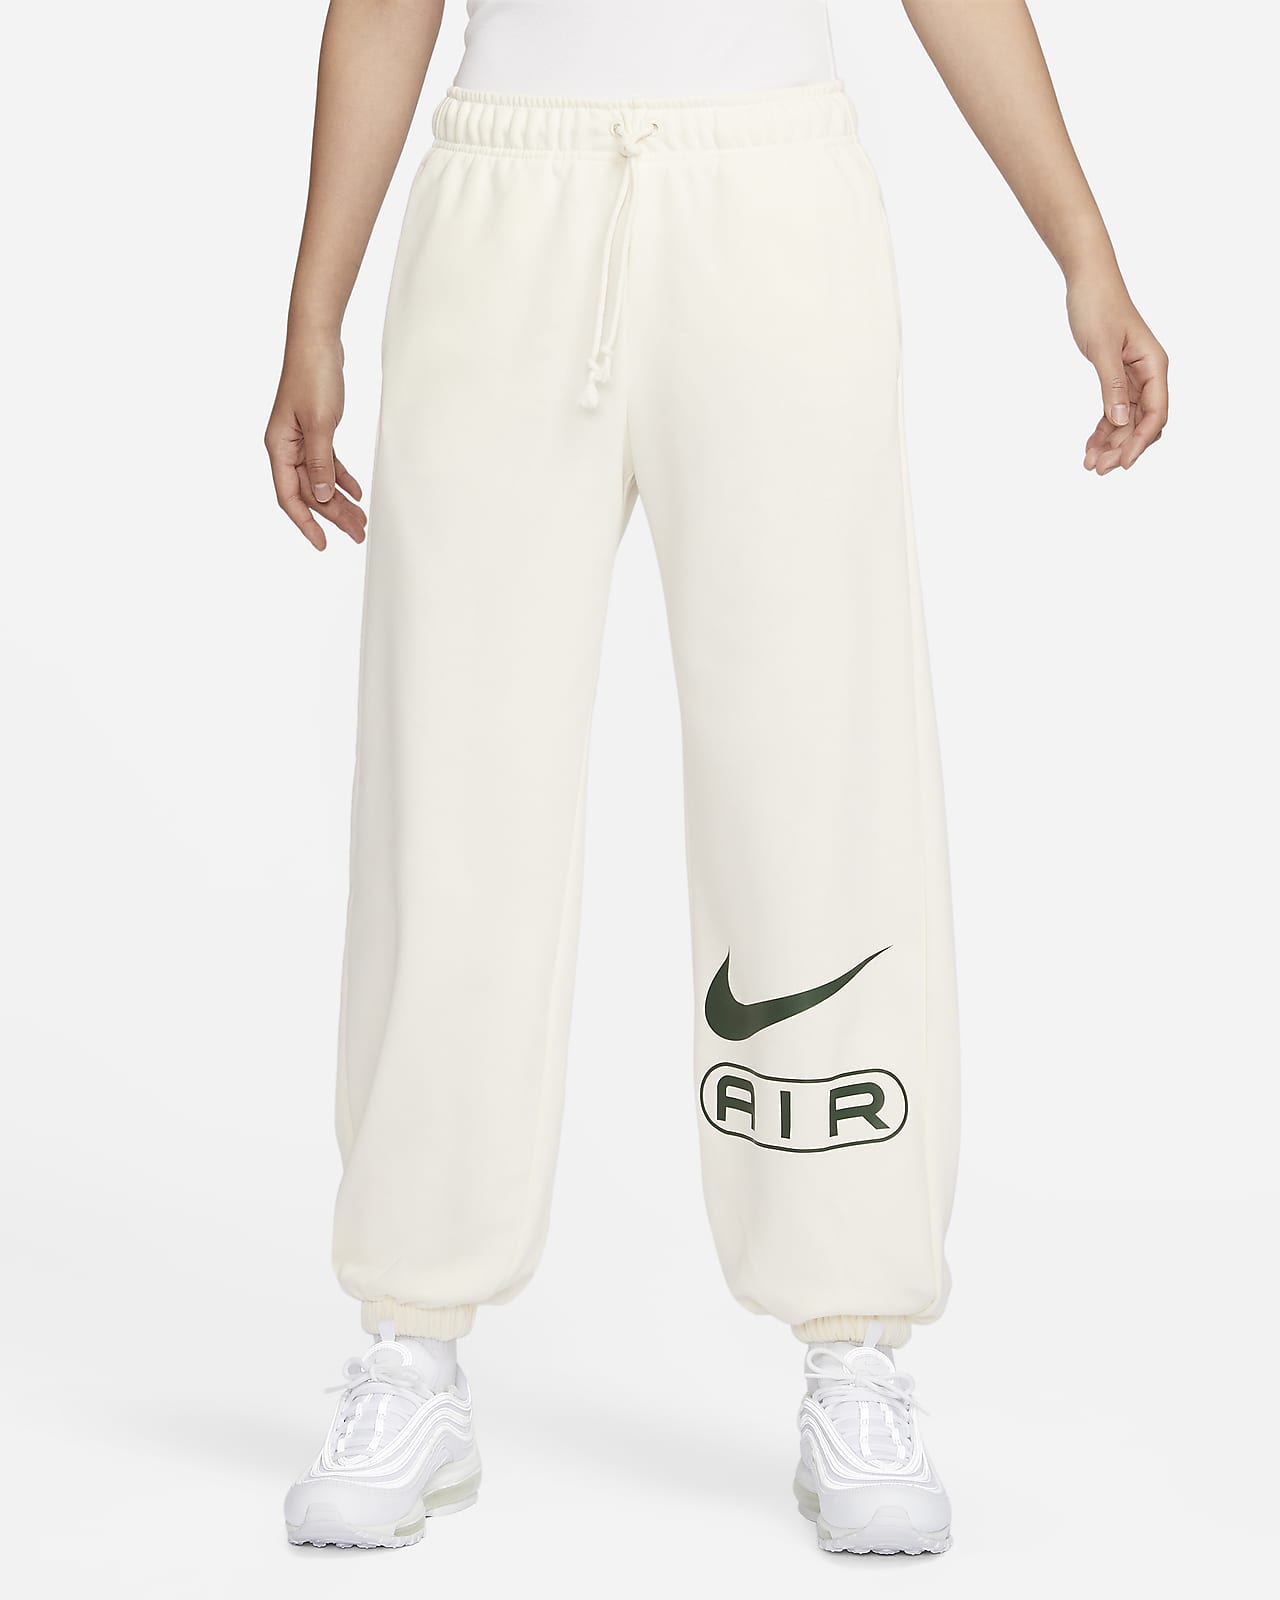 Nike Air 女子中腰针织街舞长裤